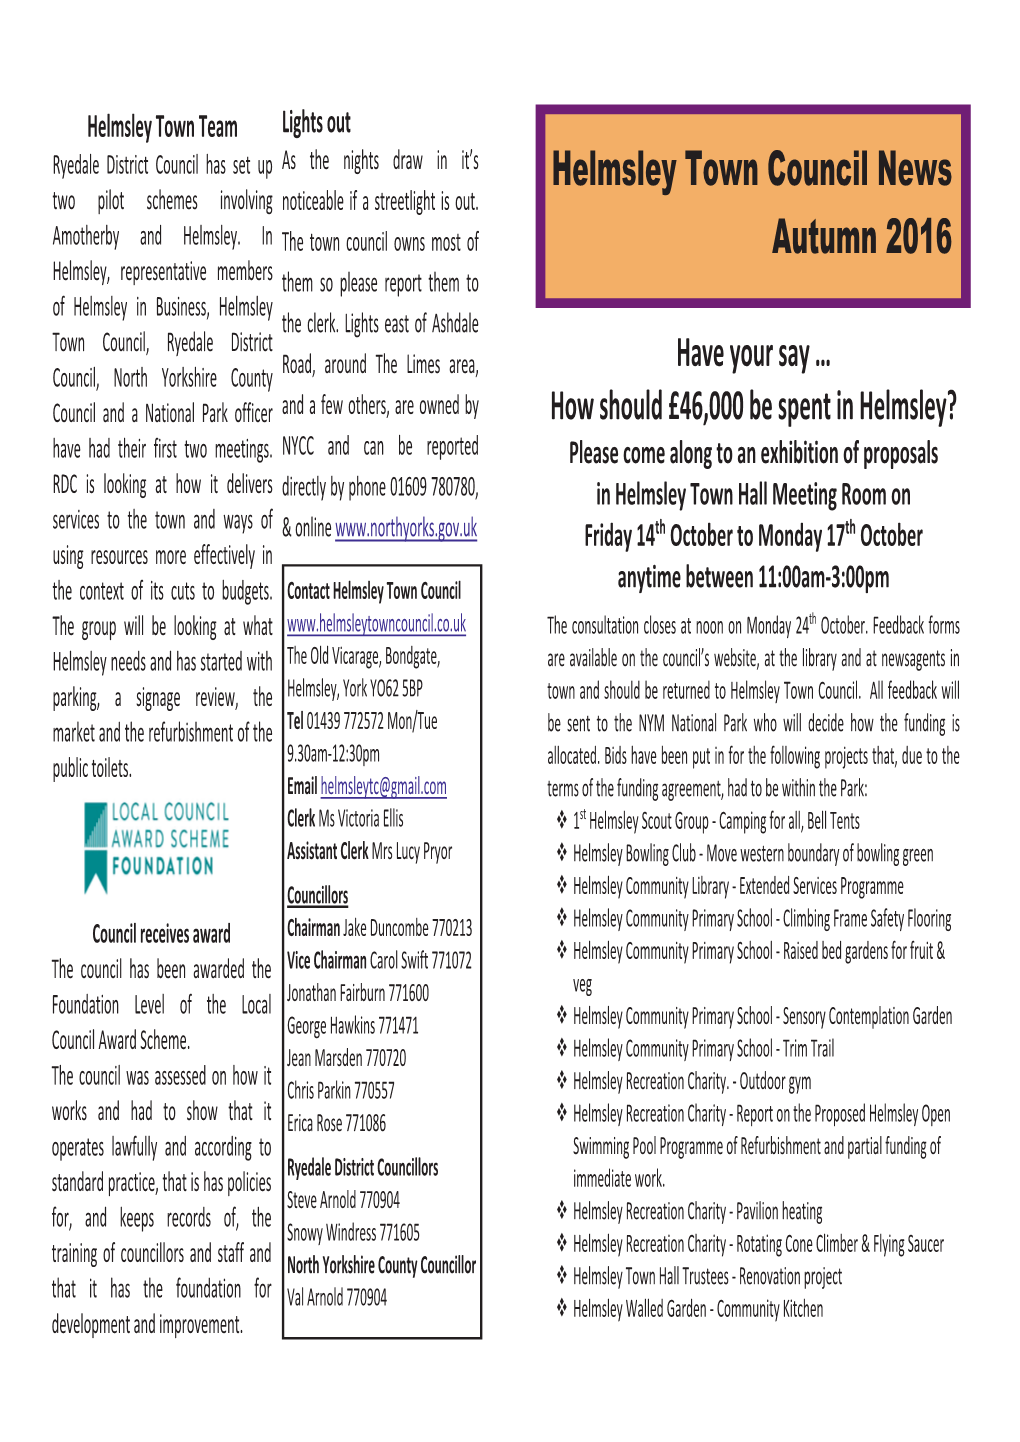 Helmsley Town Council News Autumn 2016